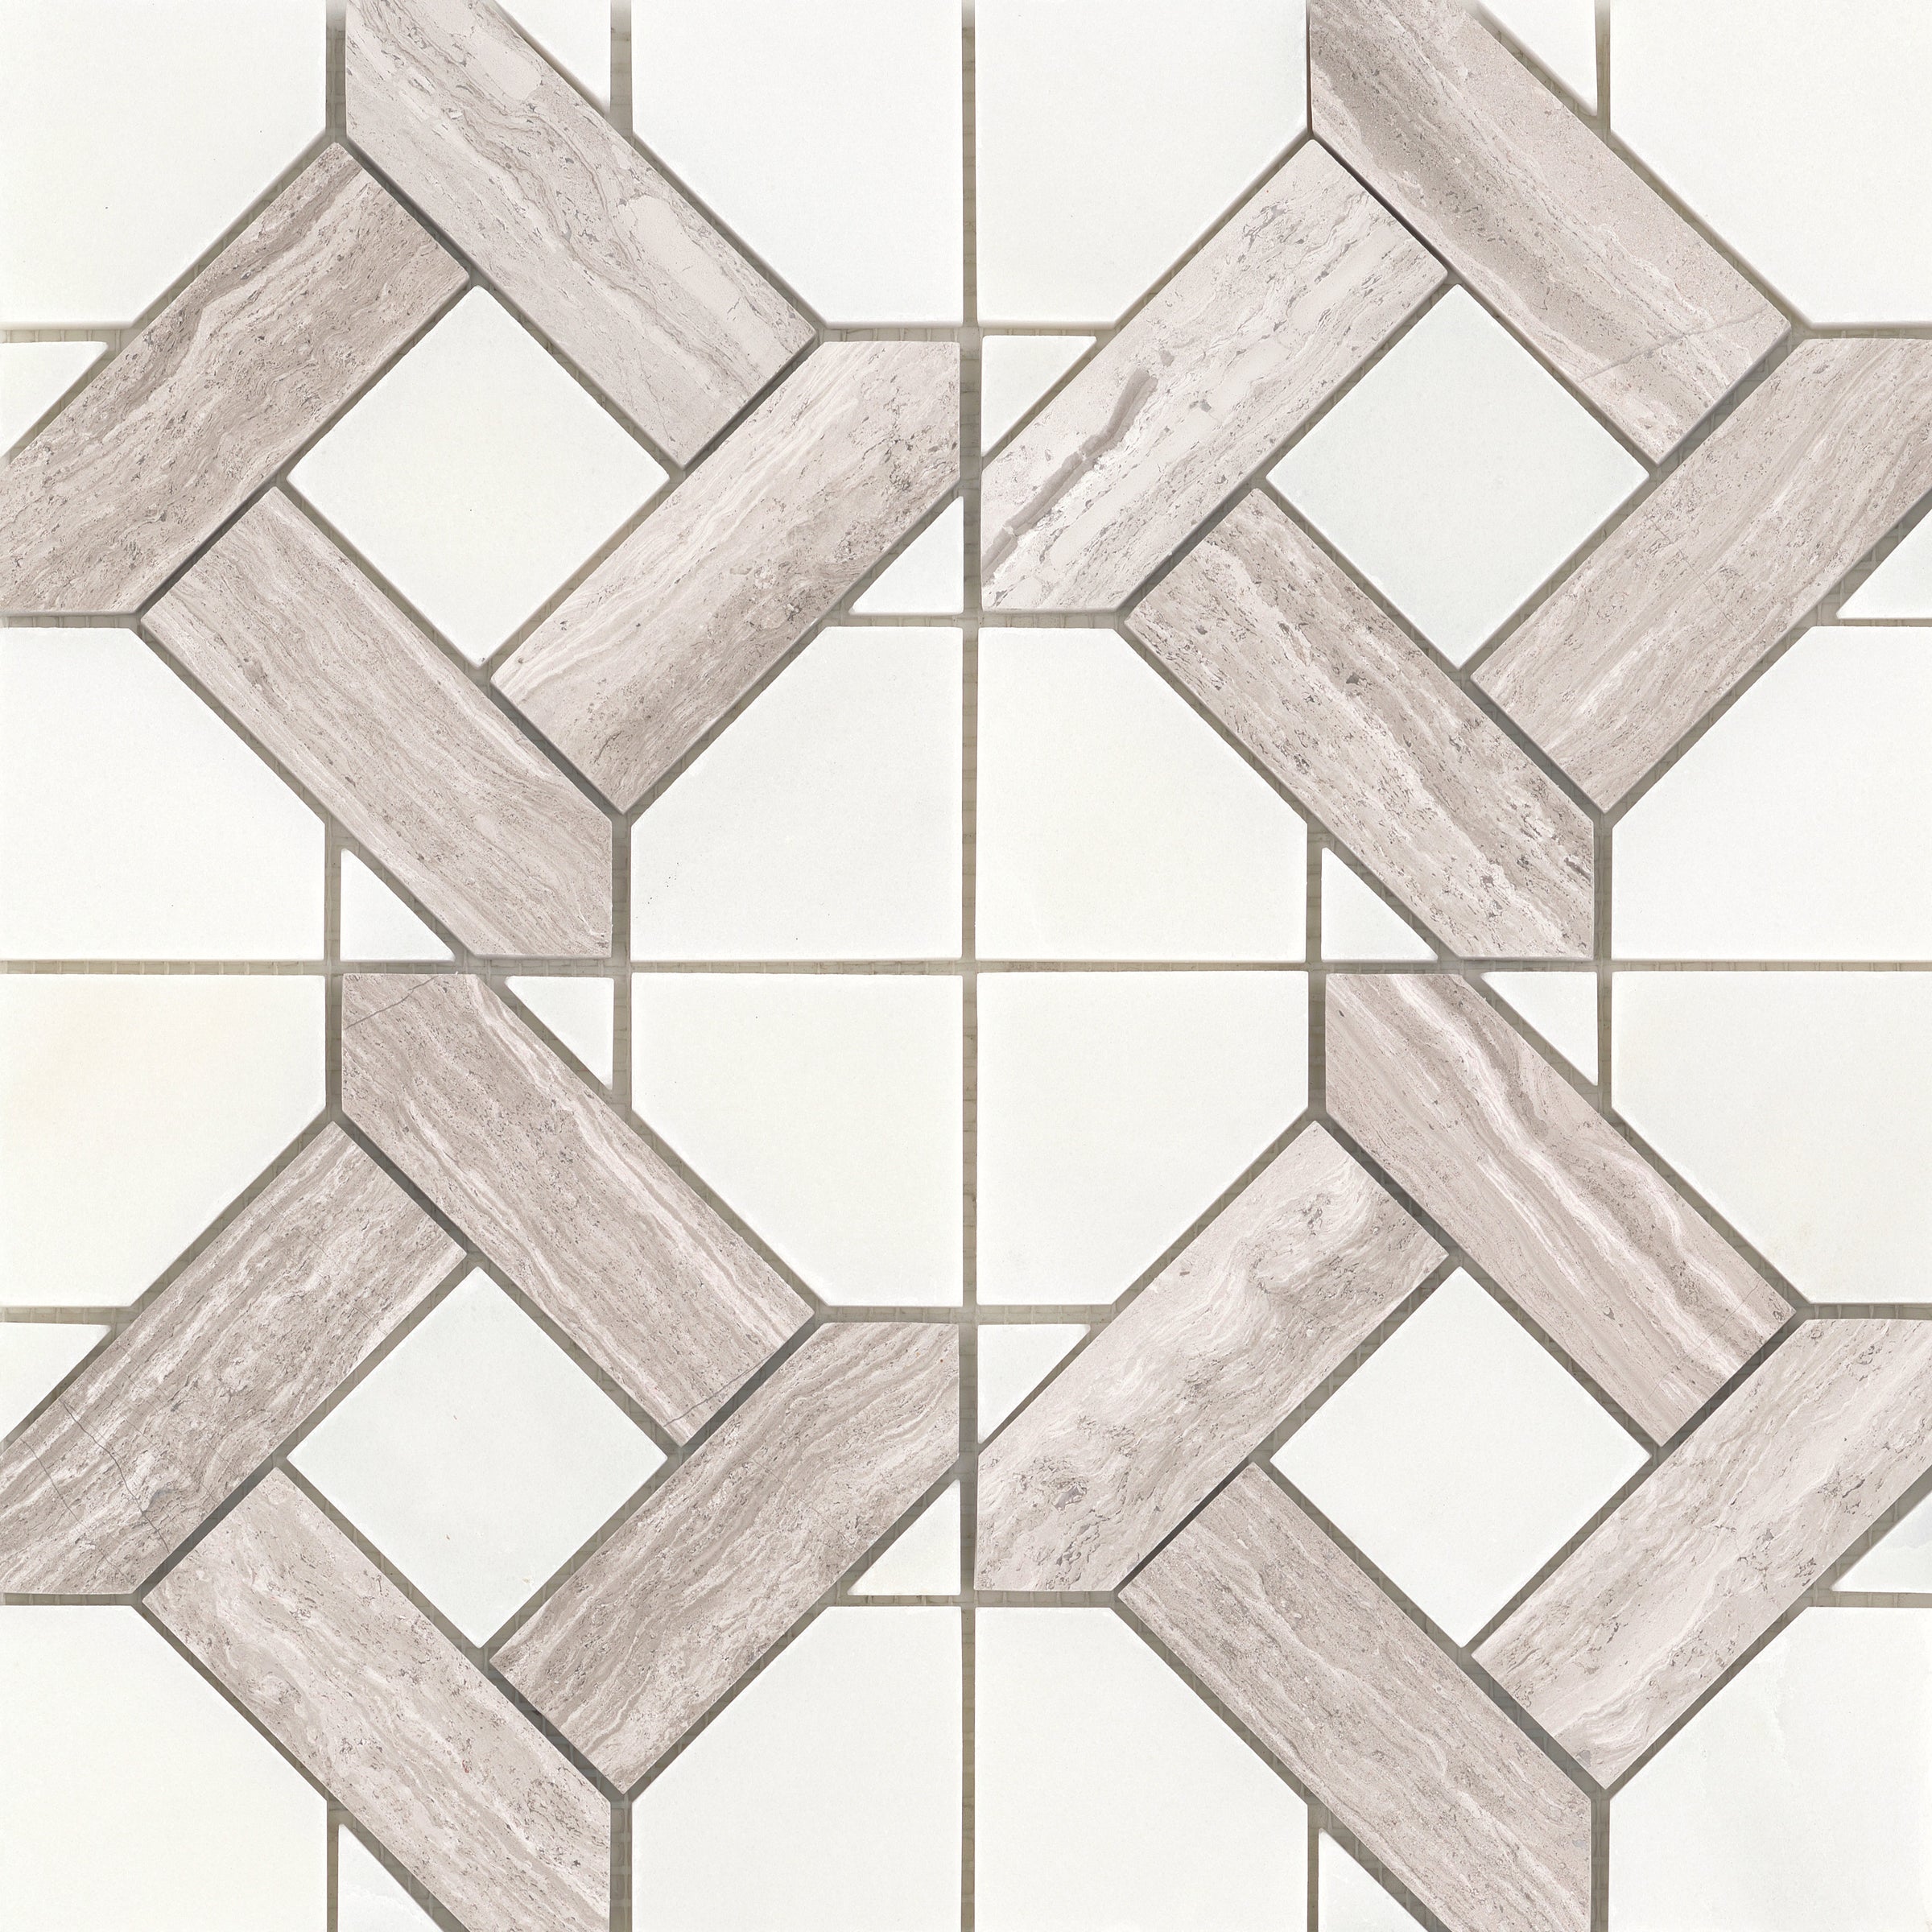 Emser ALLURO MINI MANOR CREAM 12X12 stone mosaic tile M05ALLUCR1212MMA is an Emser Tile product.